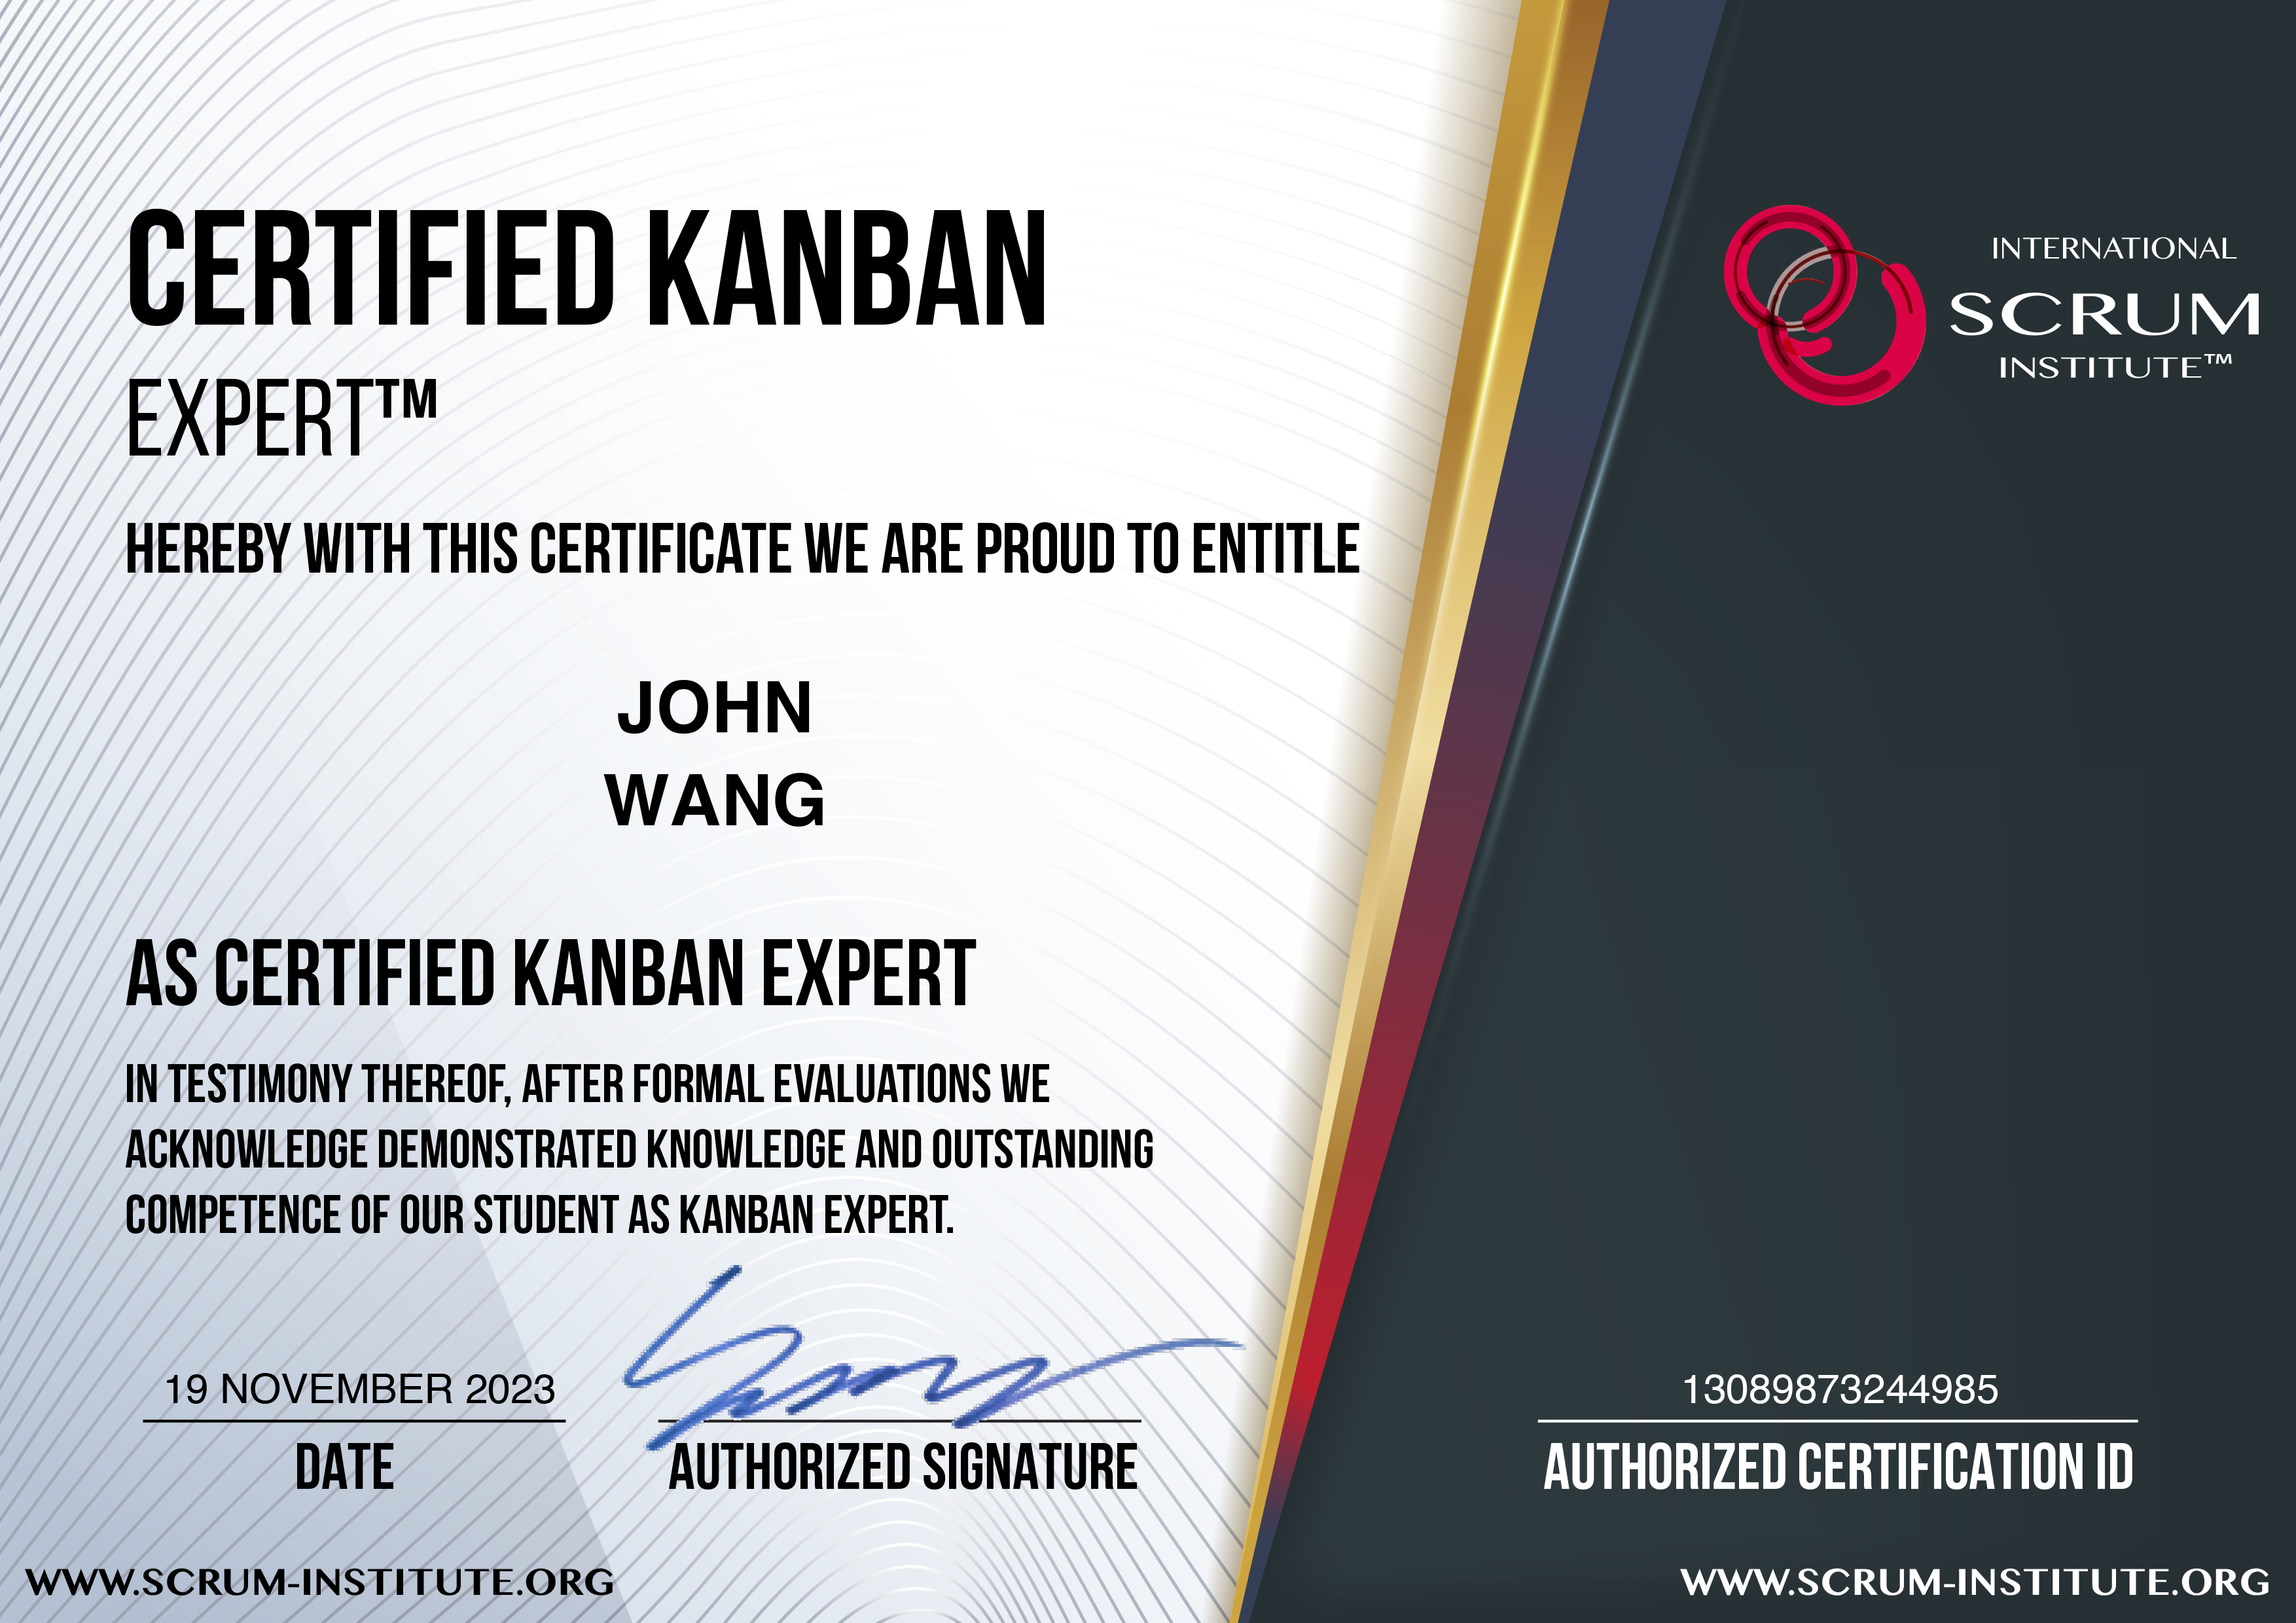 John's Certified Kanban Expert from Scrum Institute